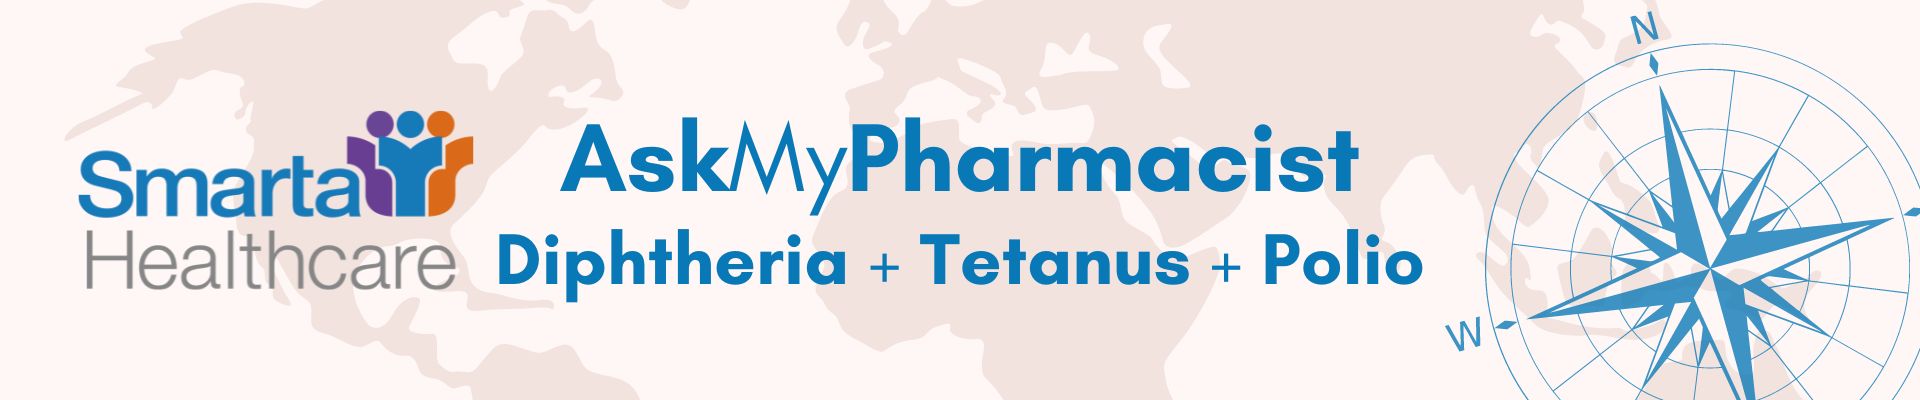 Smarta Healthcare AskMyPharmacist Diphtheria Tetanus Polio Vaccine Bedford